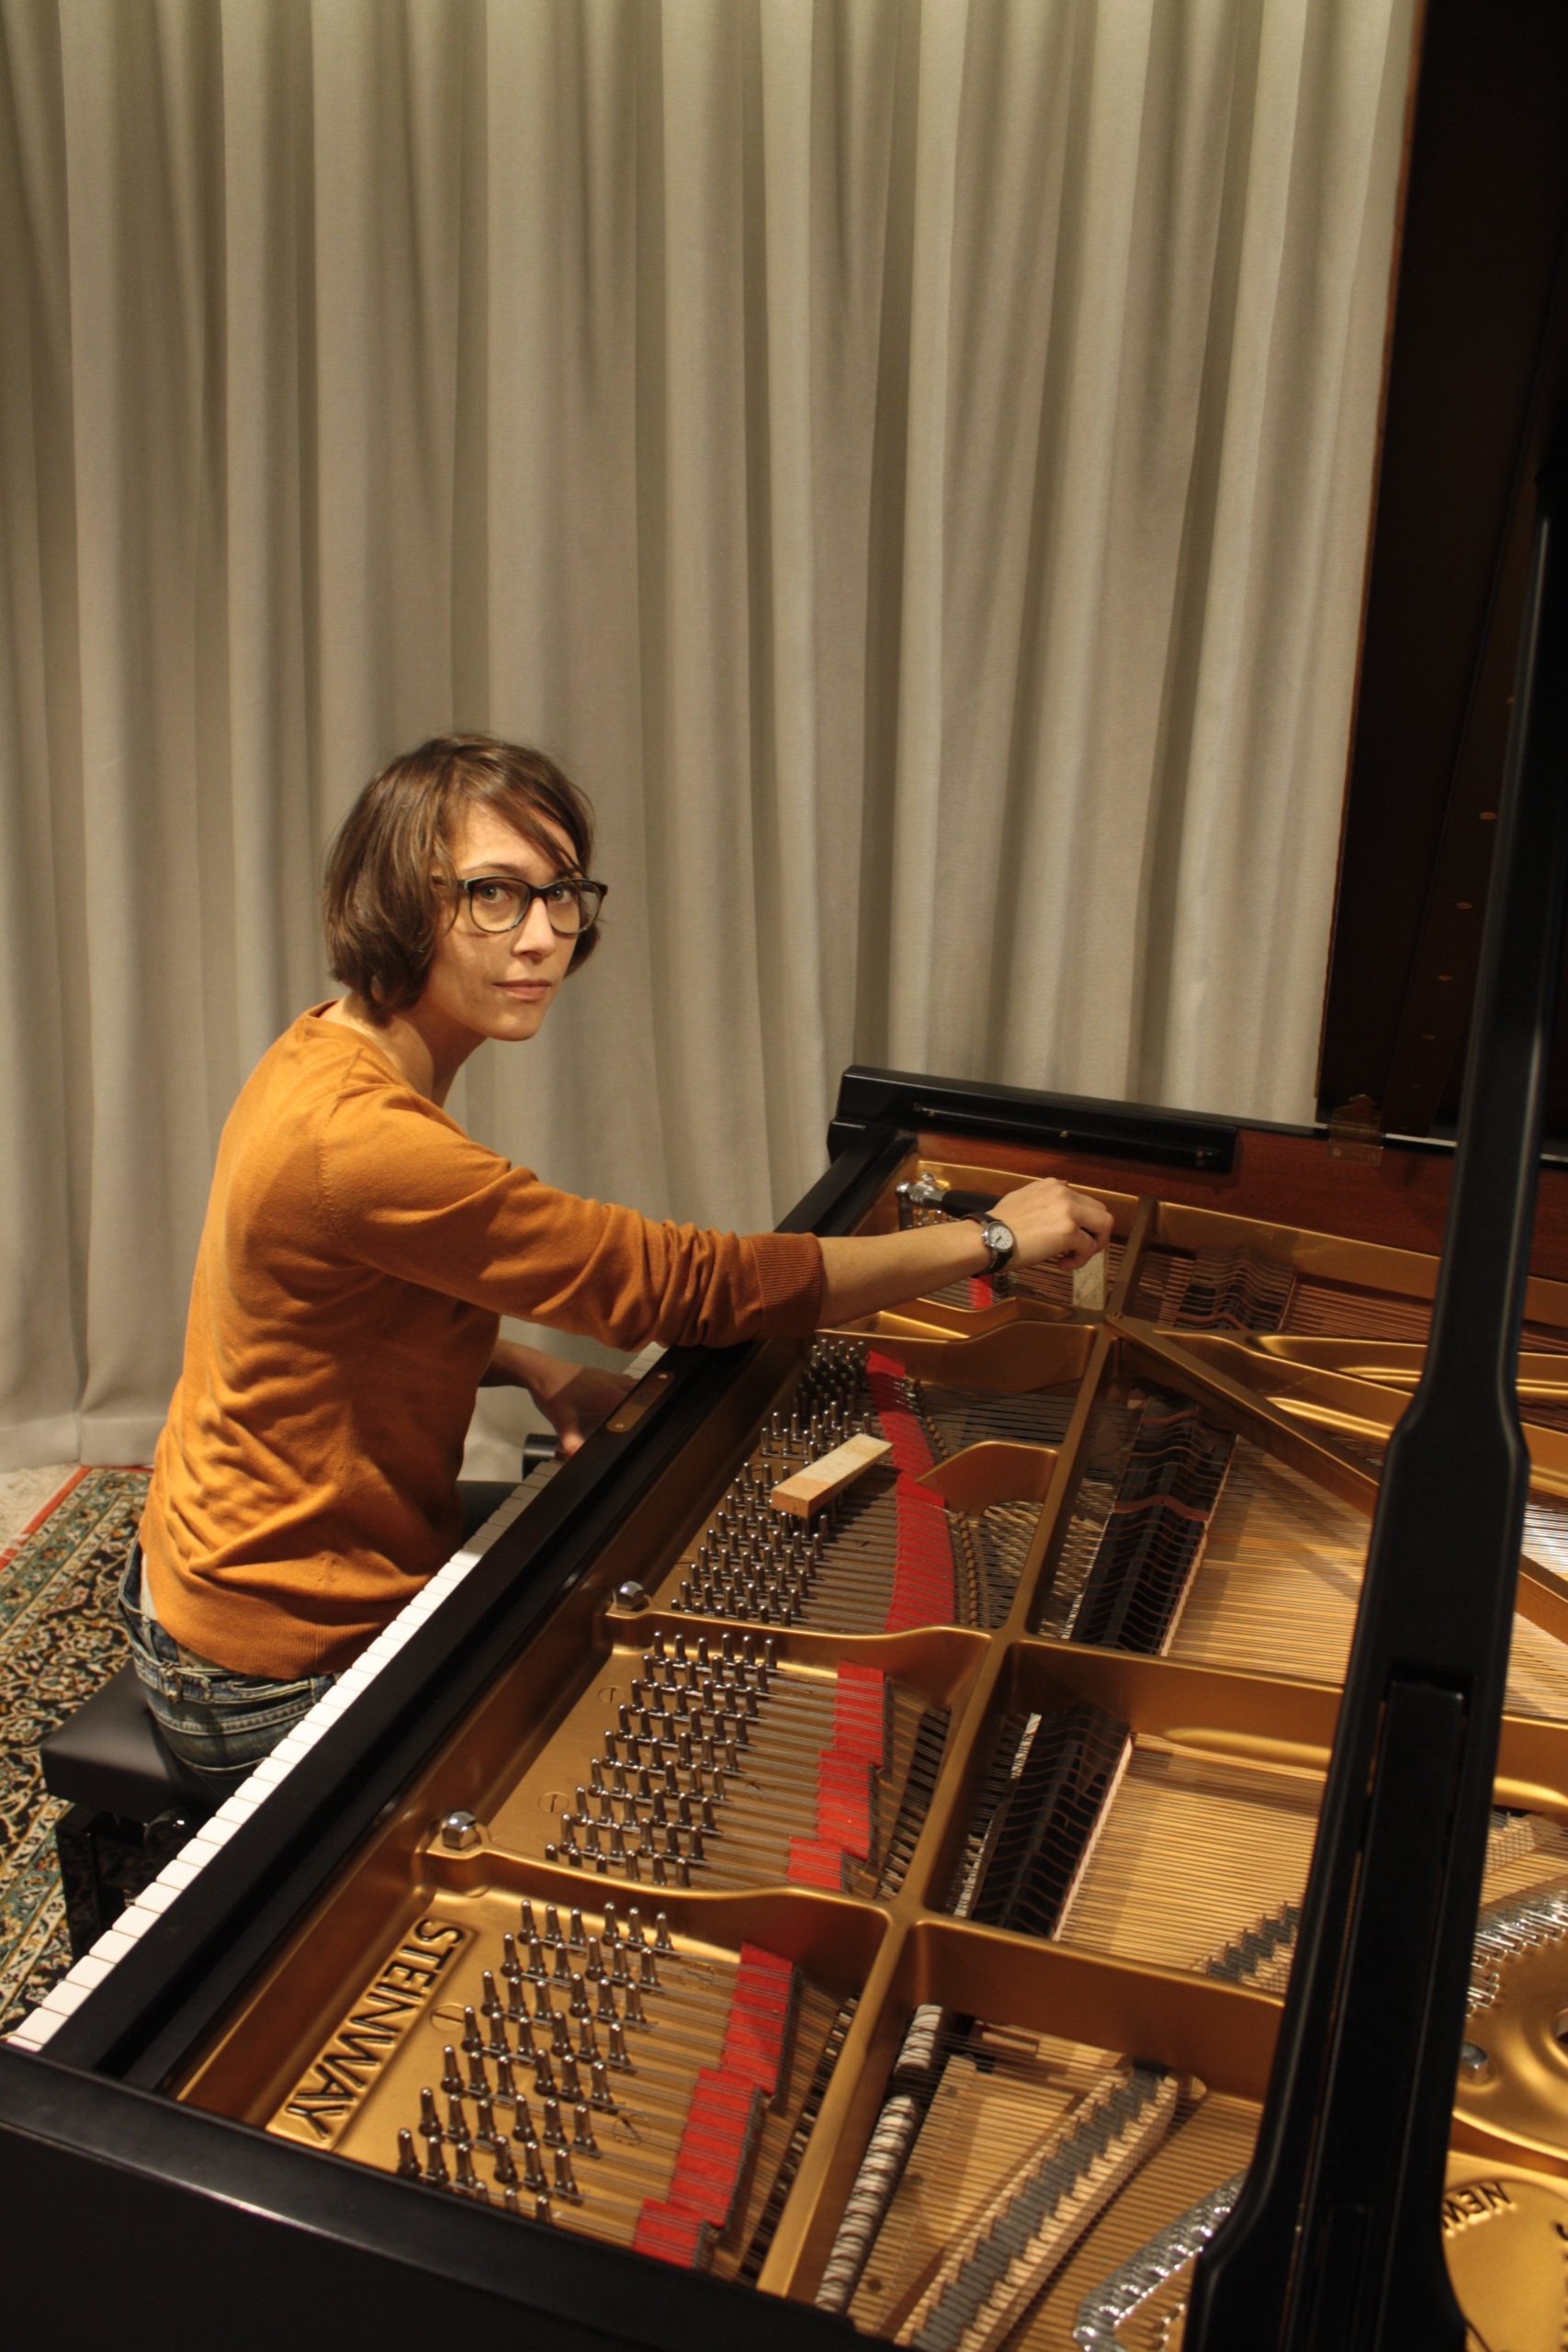 Christina tuning a grand piano